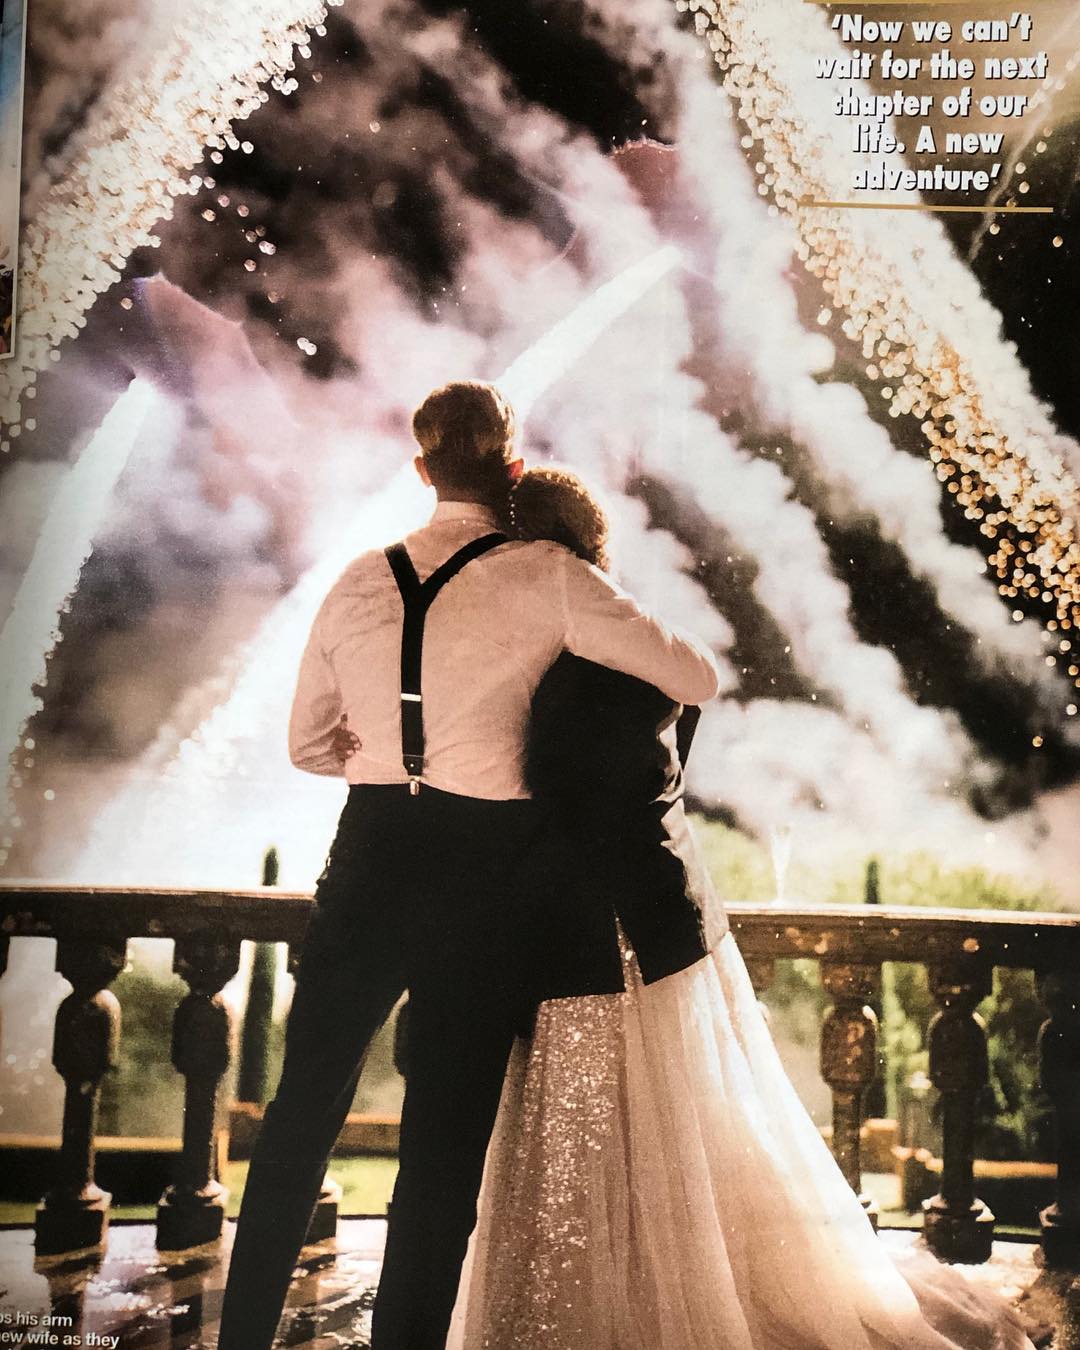 Leona Lewis & Dennis Jauch had a Magical Wedding | BellaNaija1080 x 1350